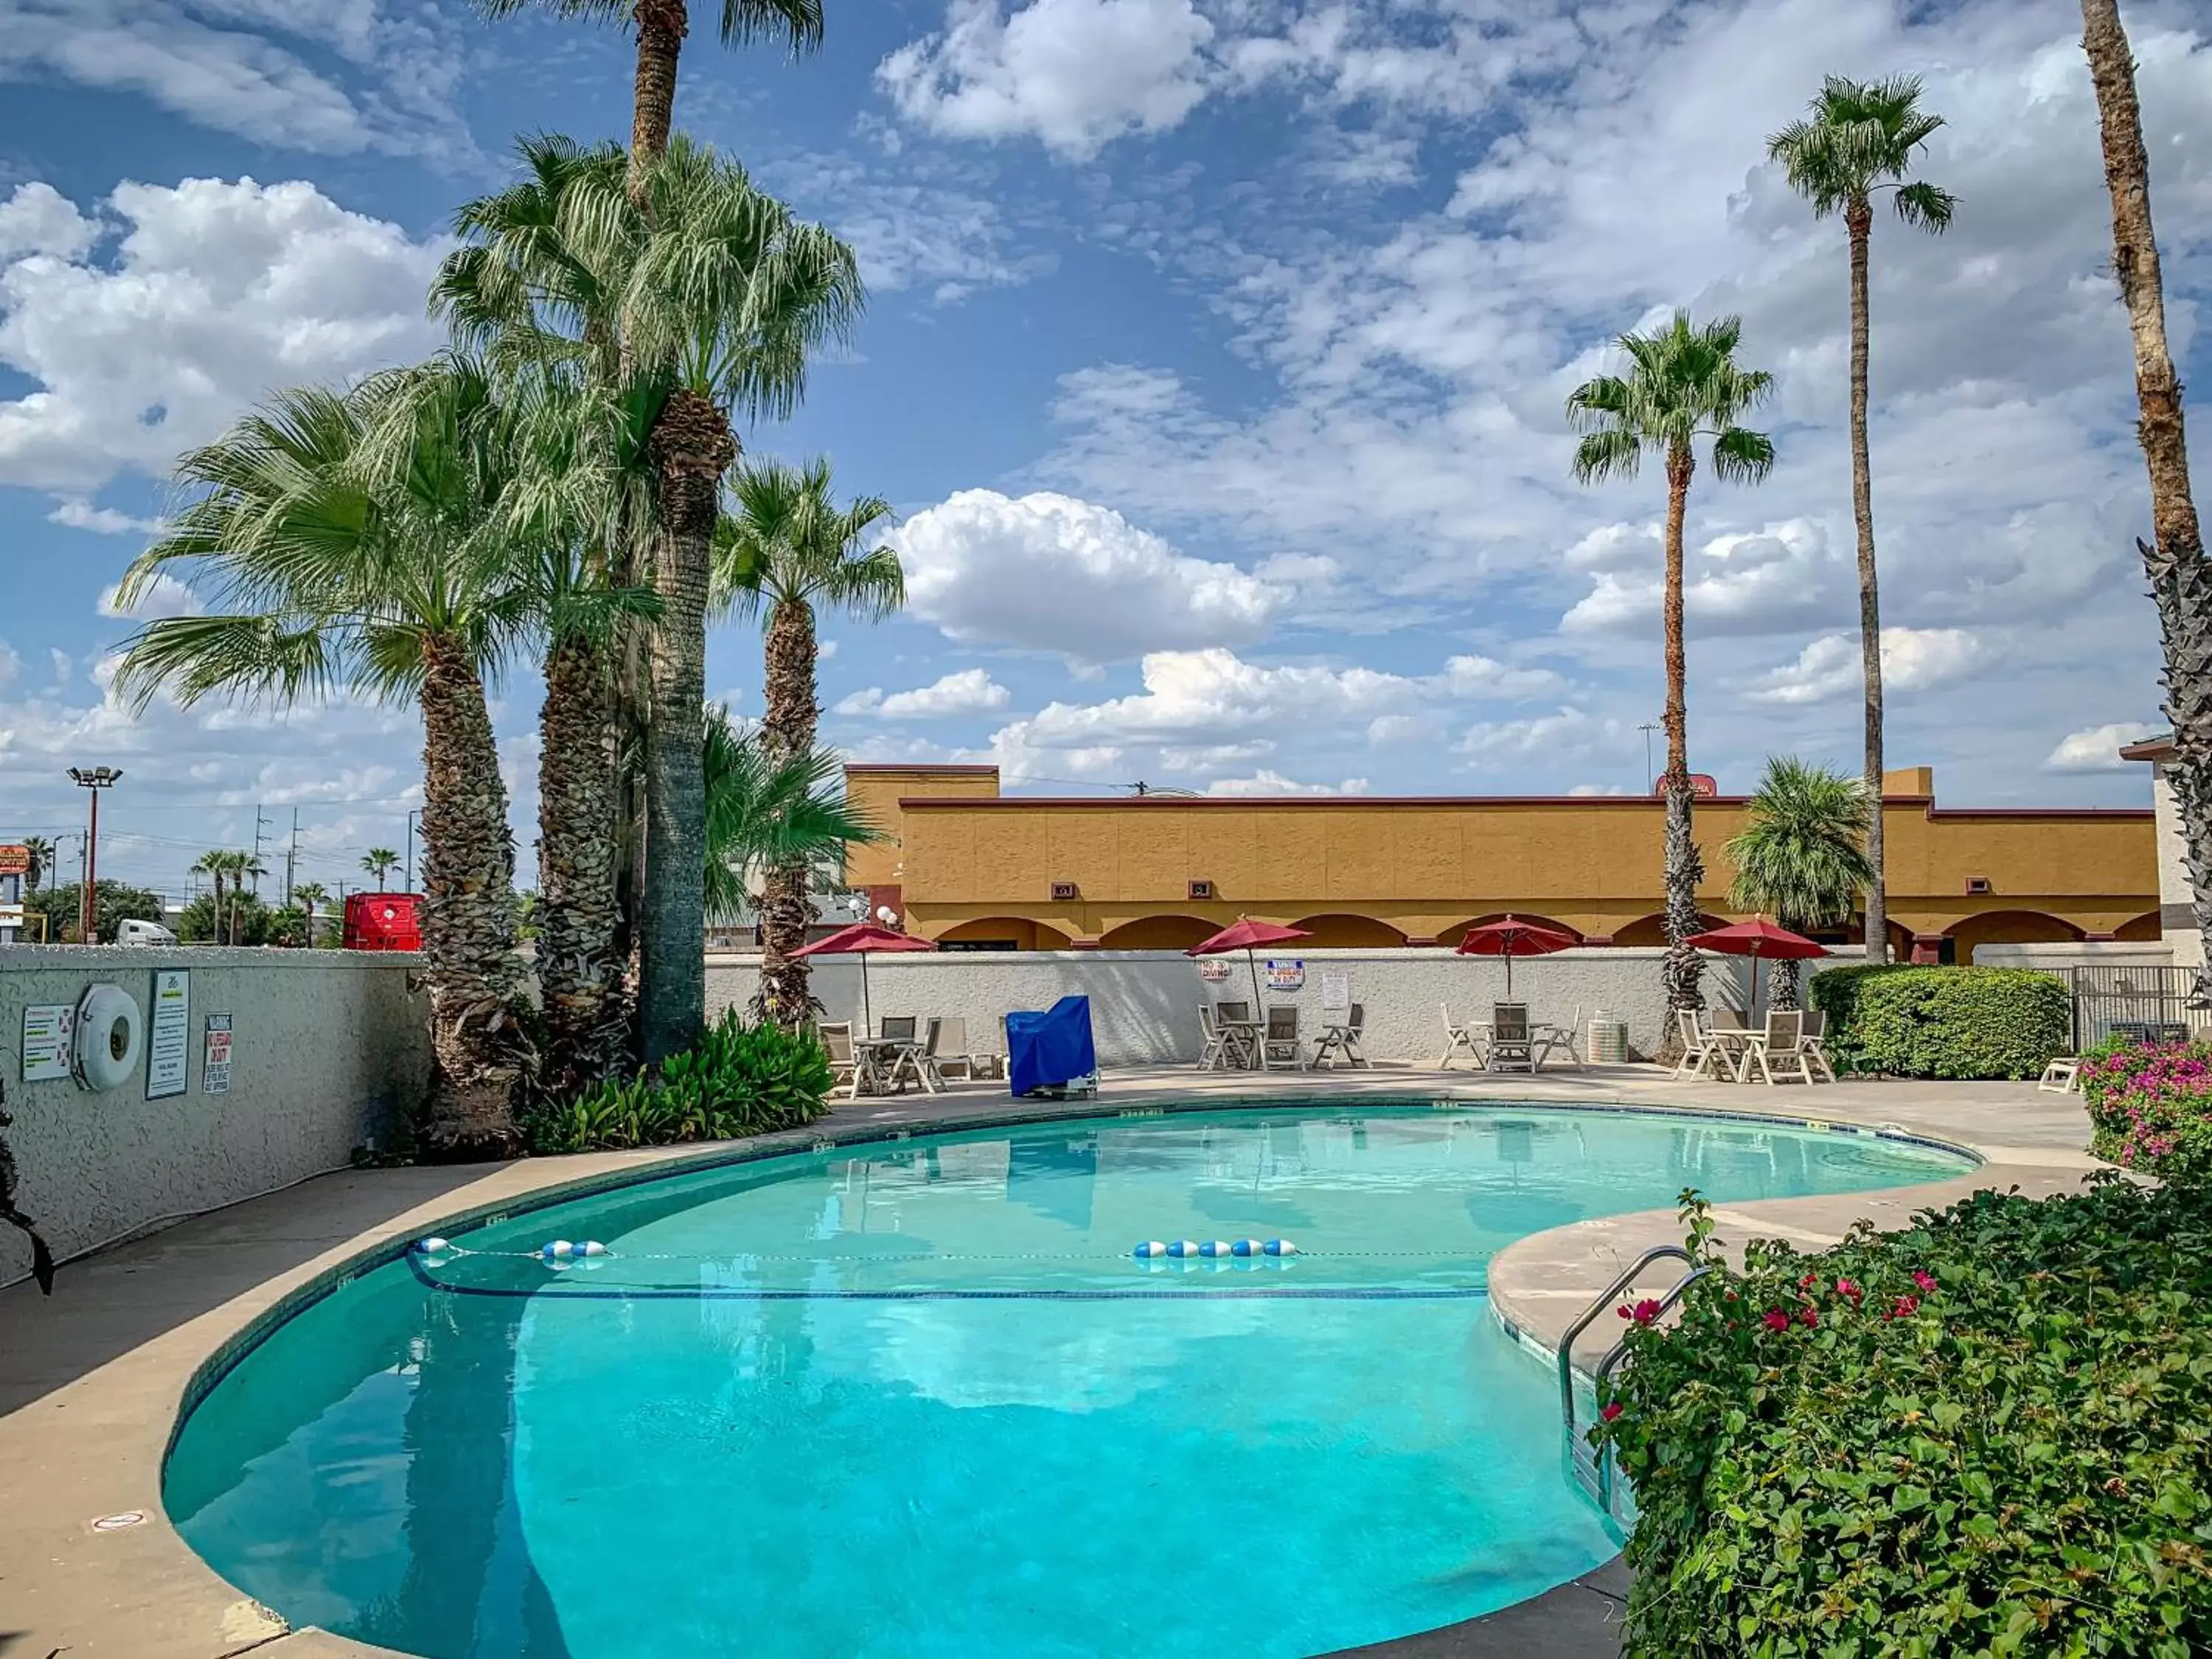 Swimming Pool in Studio 6 Laredo, Tx - North I-35